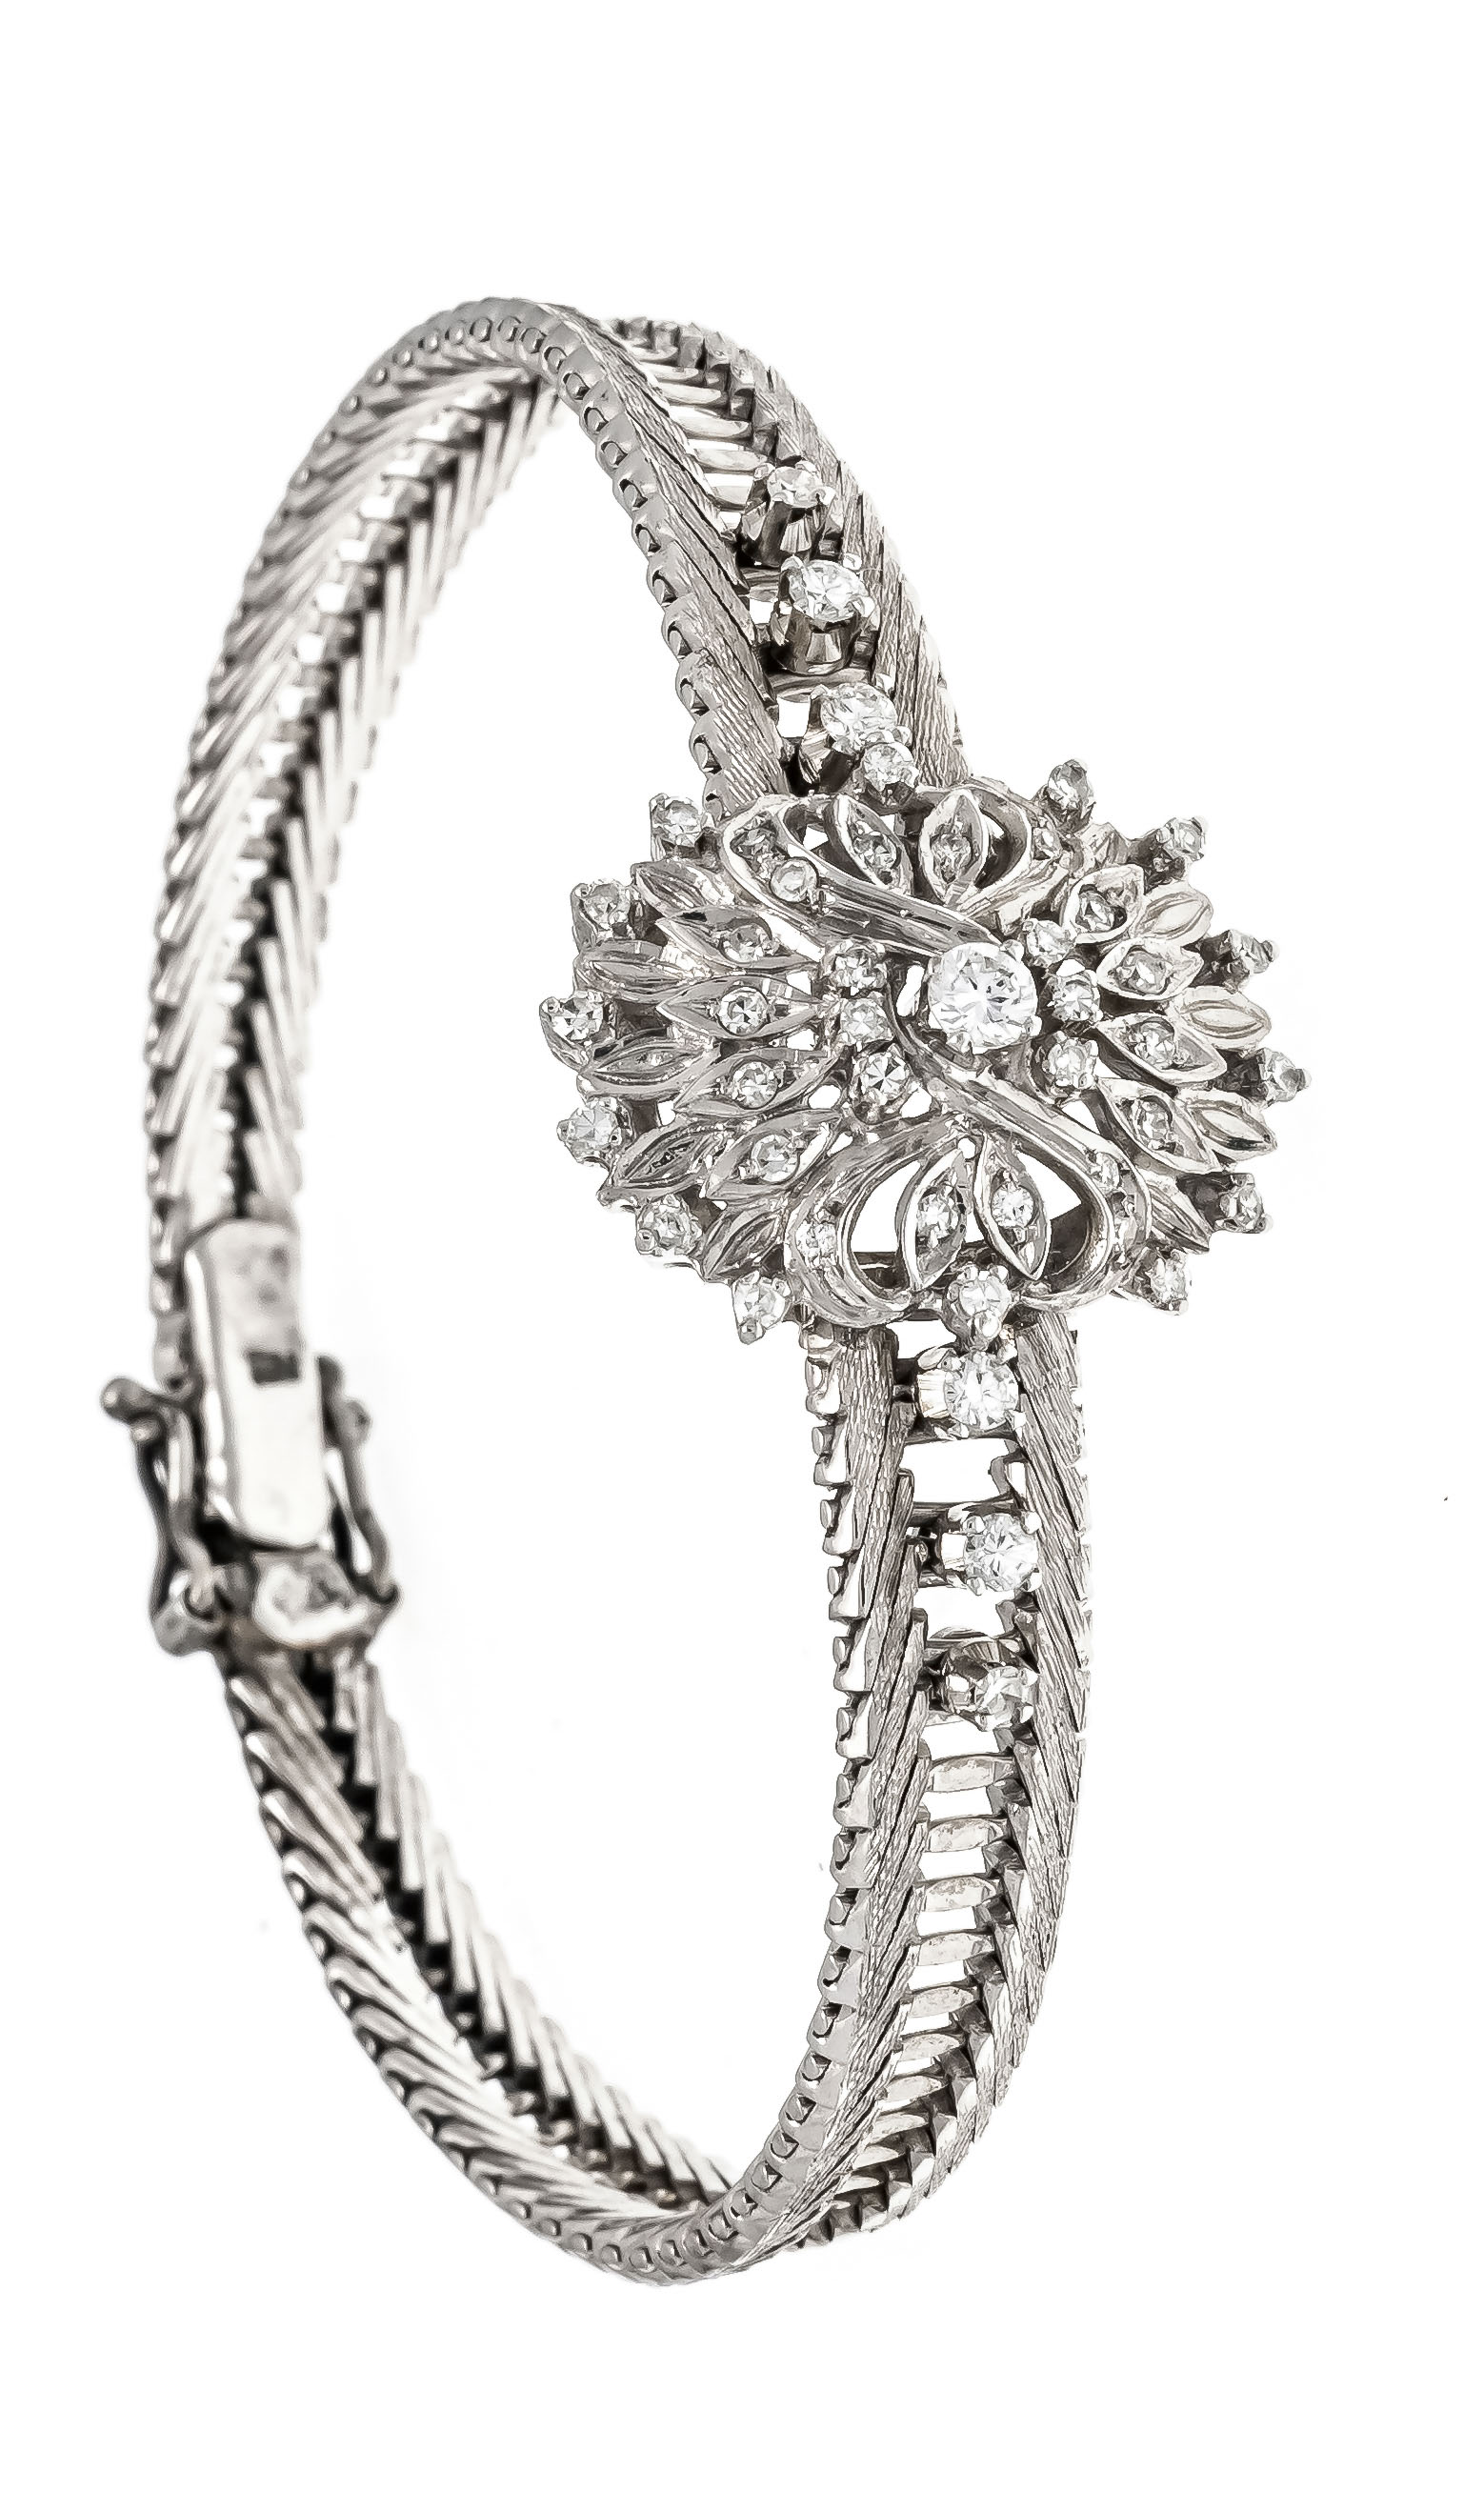 Centerpiece diamond bracelet WG 750/000 with 5 brilliant-cut diamonds and 32 octagonal diamonds,